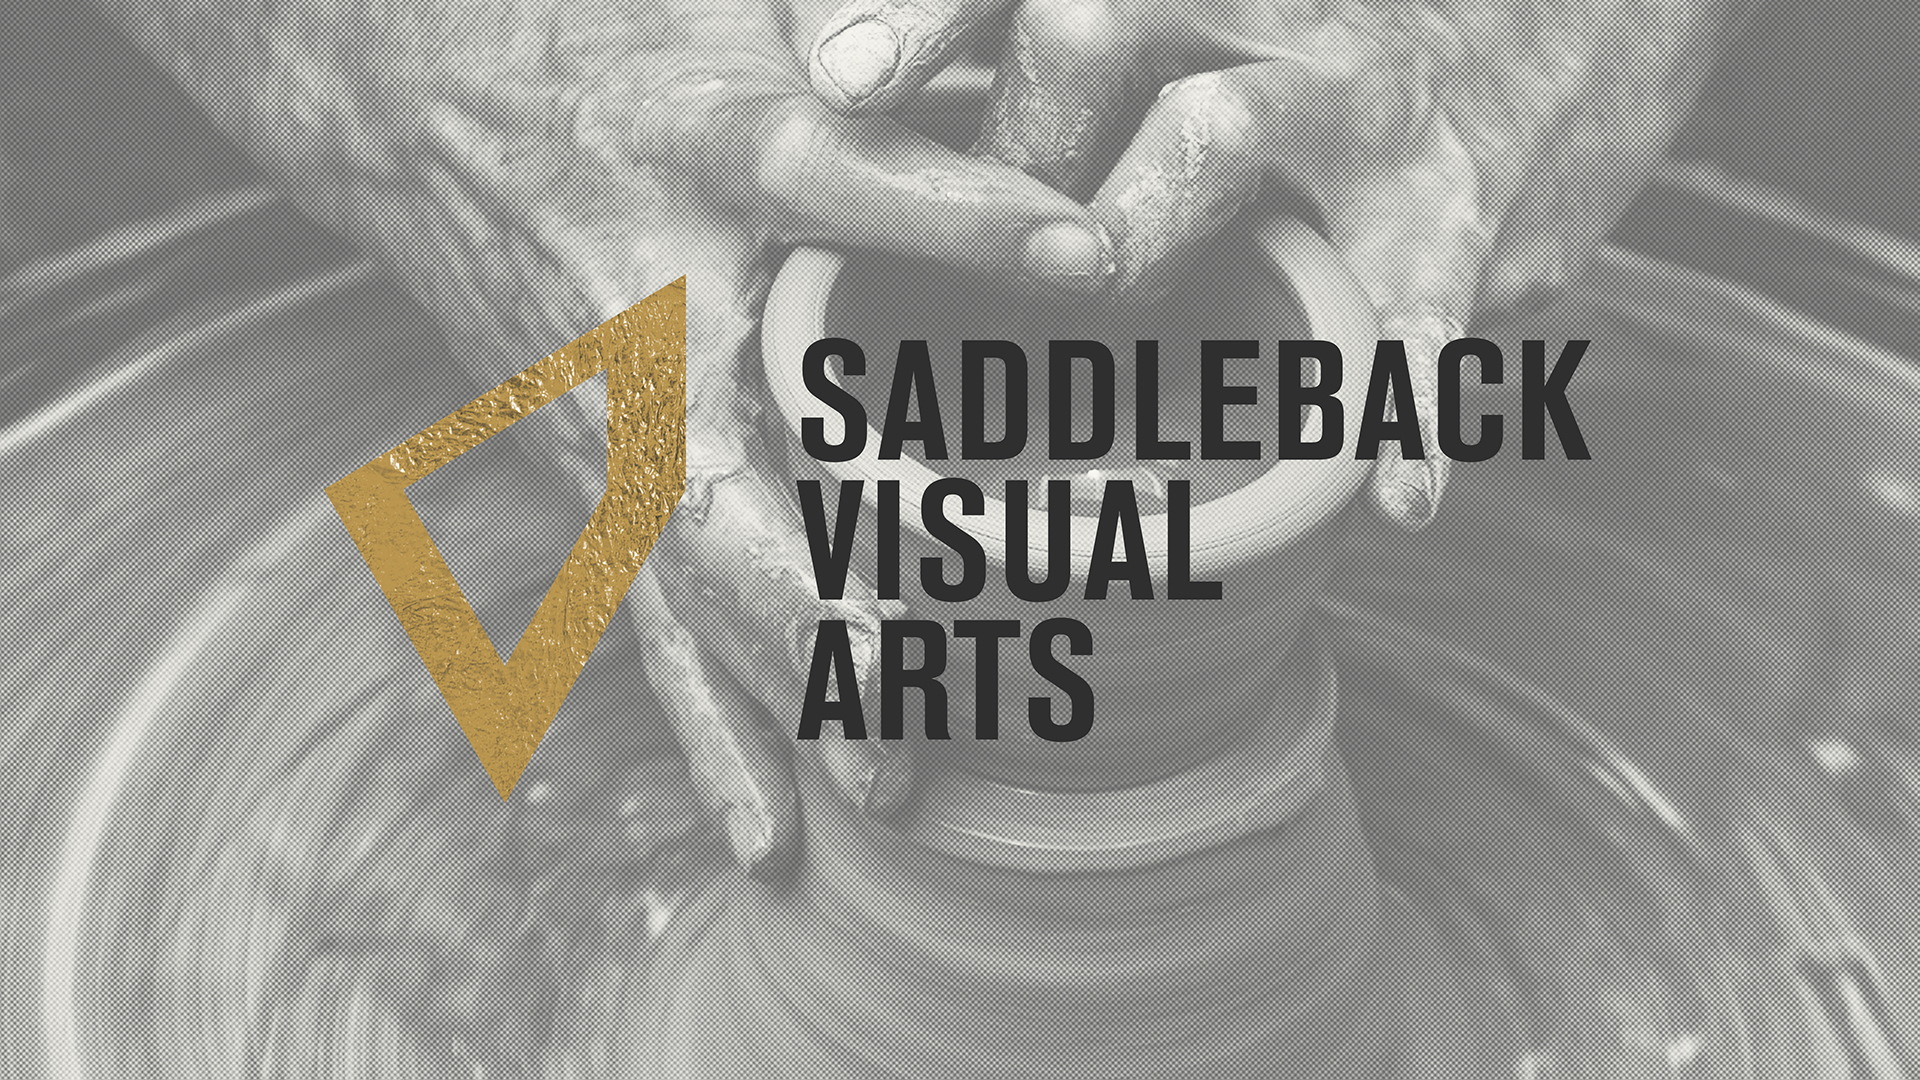 Saddleback Visual Arts